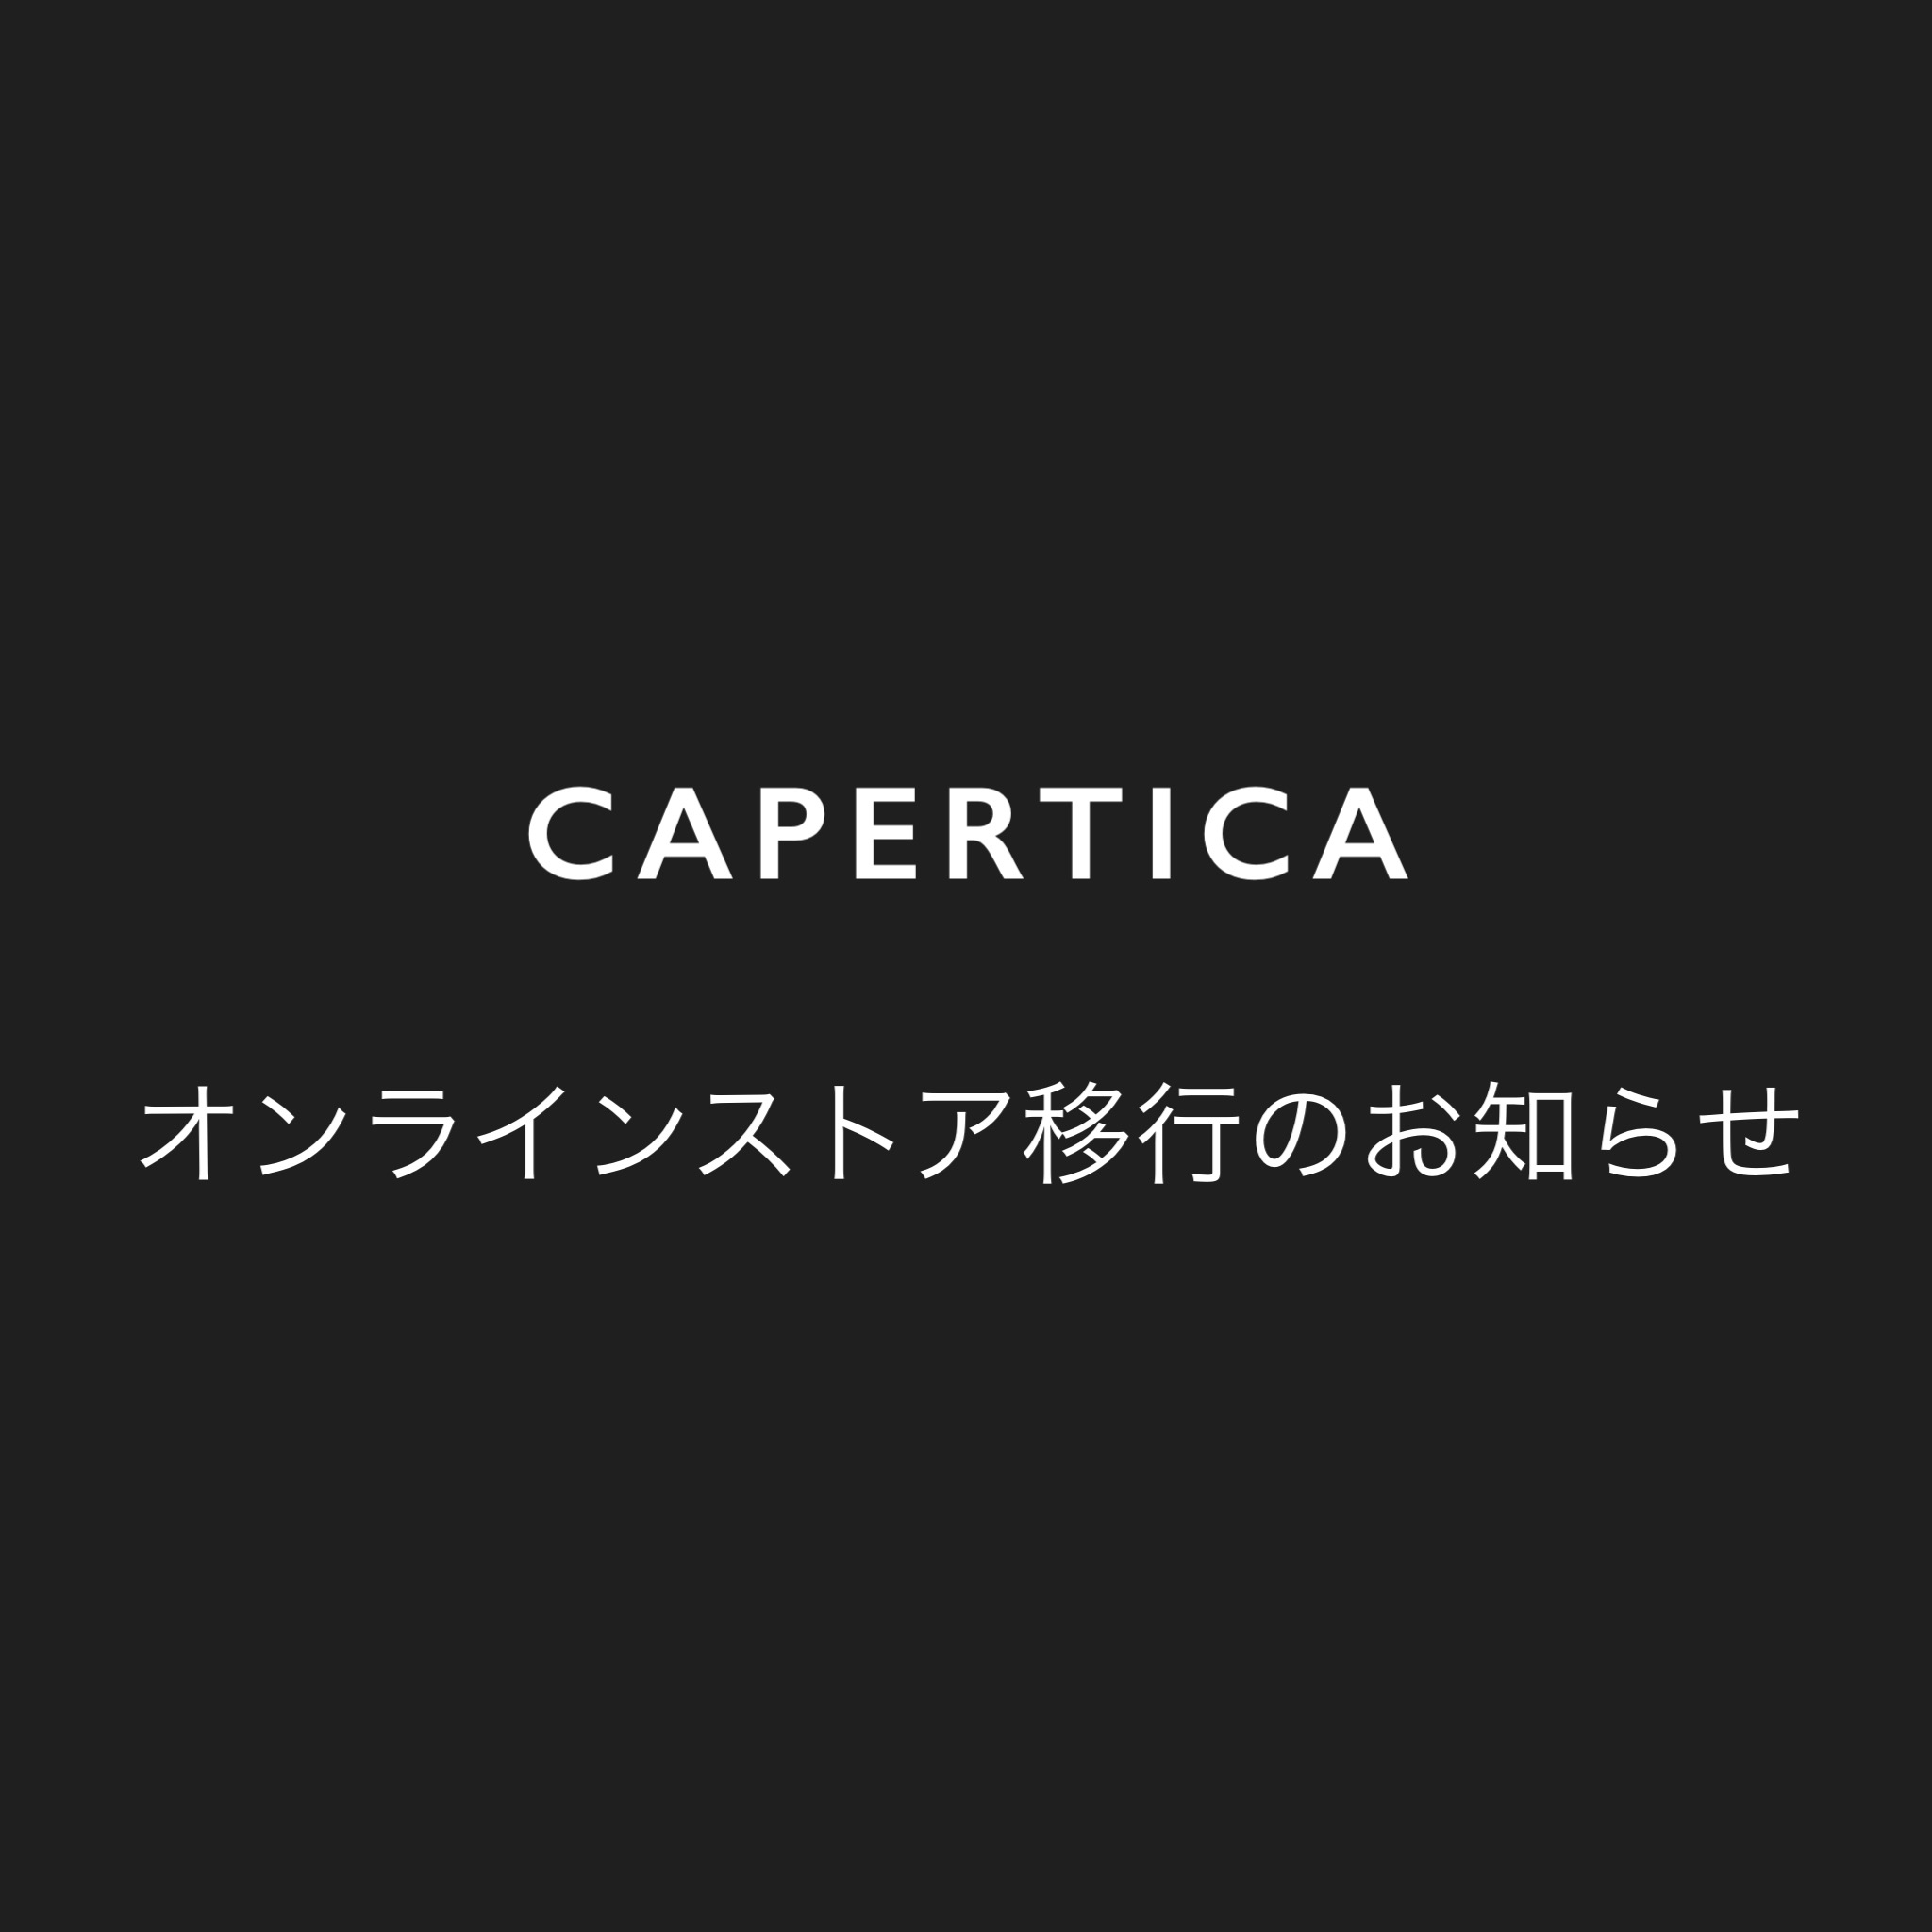 【CAPERTICA】オンラインストア移行のお知らせ